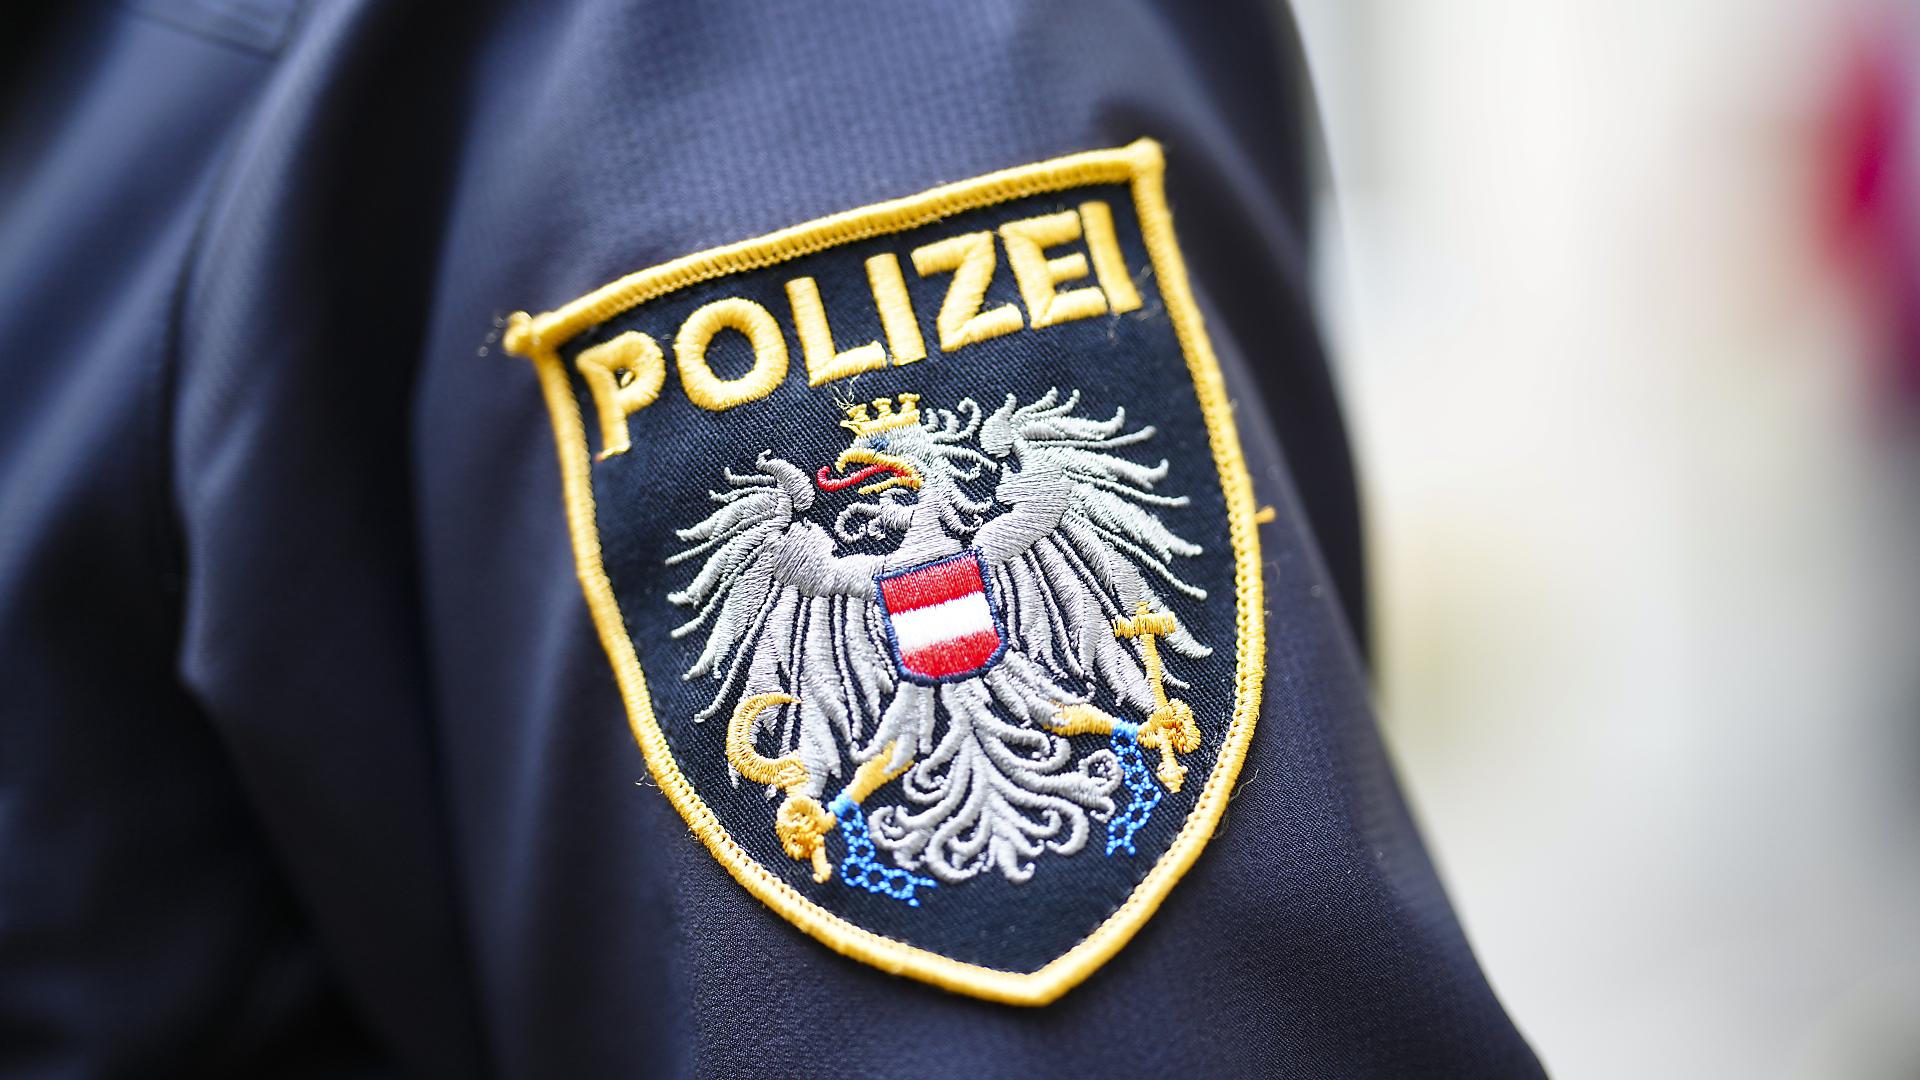 18-Jähriger soll Kellerbrand in Bad Ischl gelegt haben